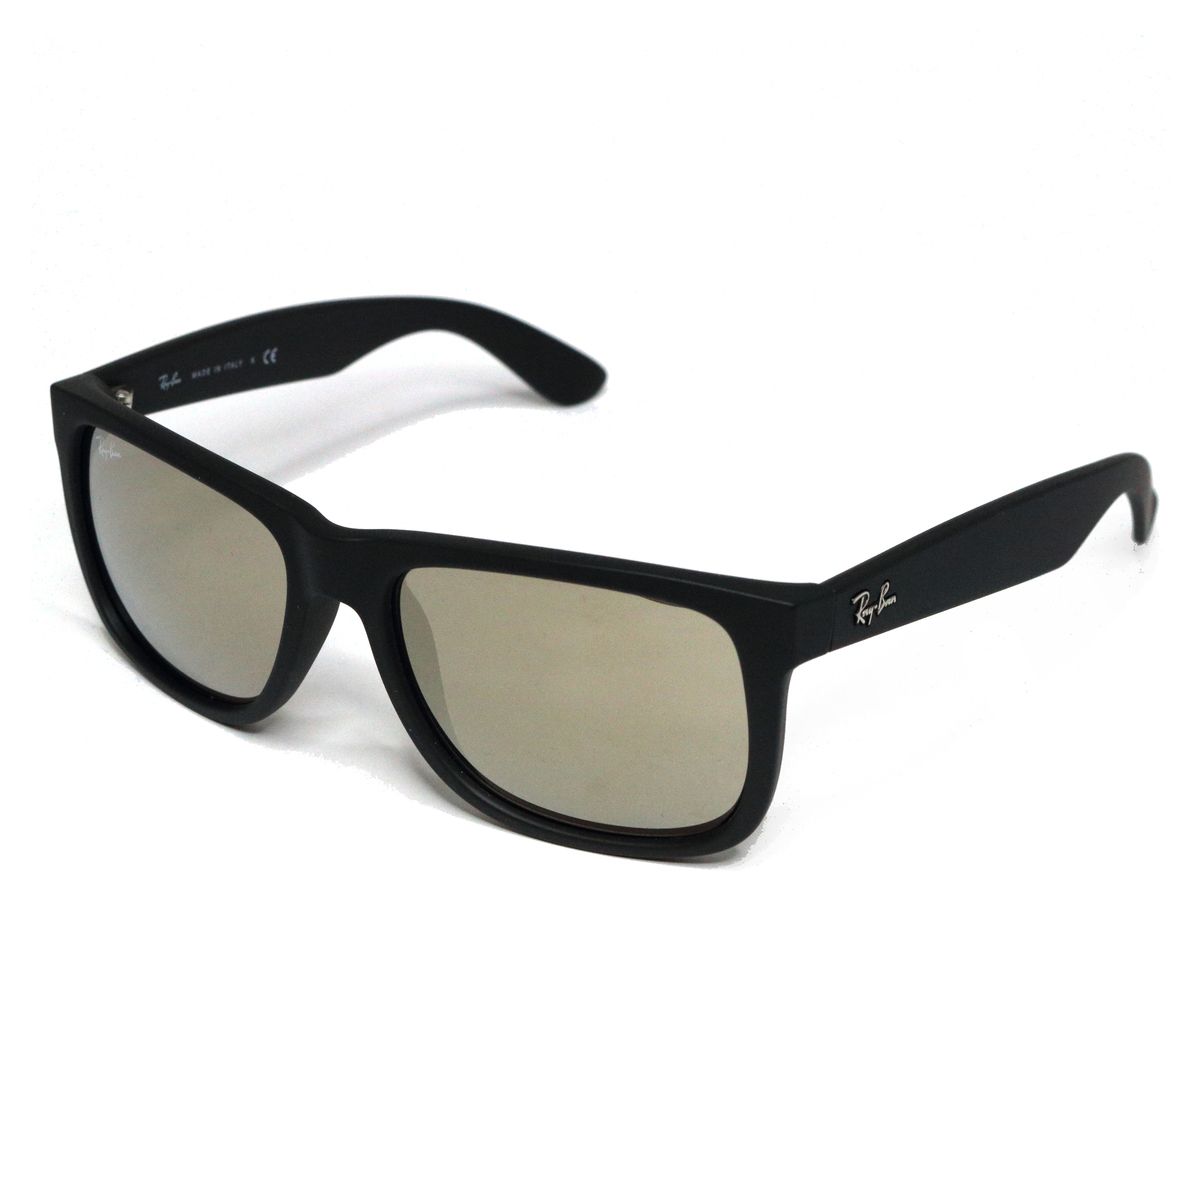 RB4165 Square Sunglasses 622 5A - size 55